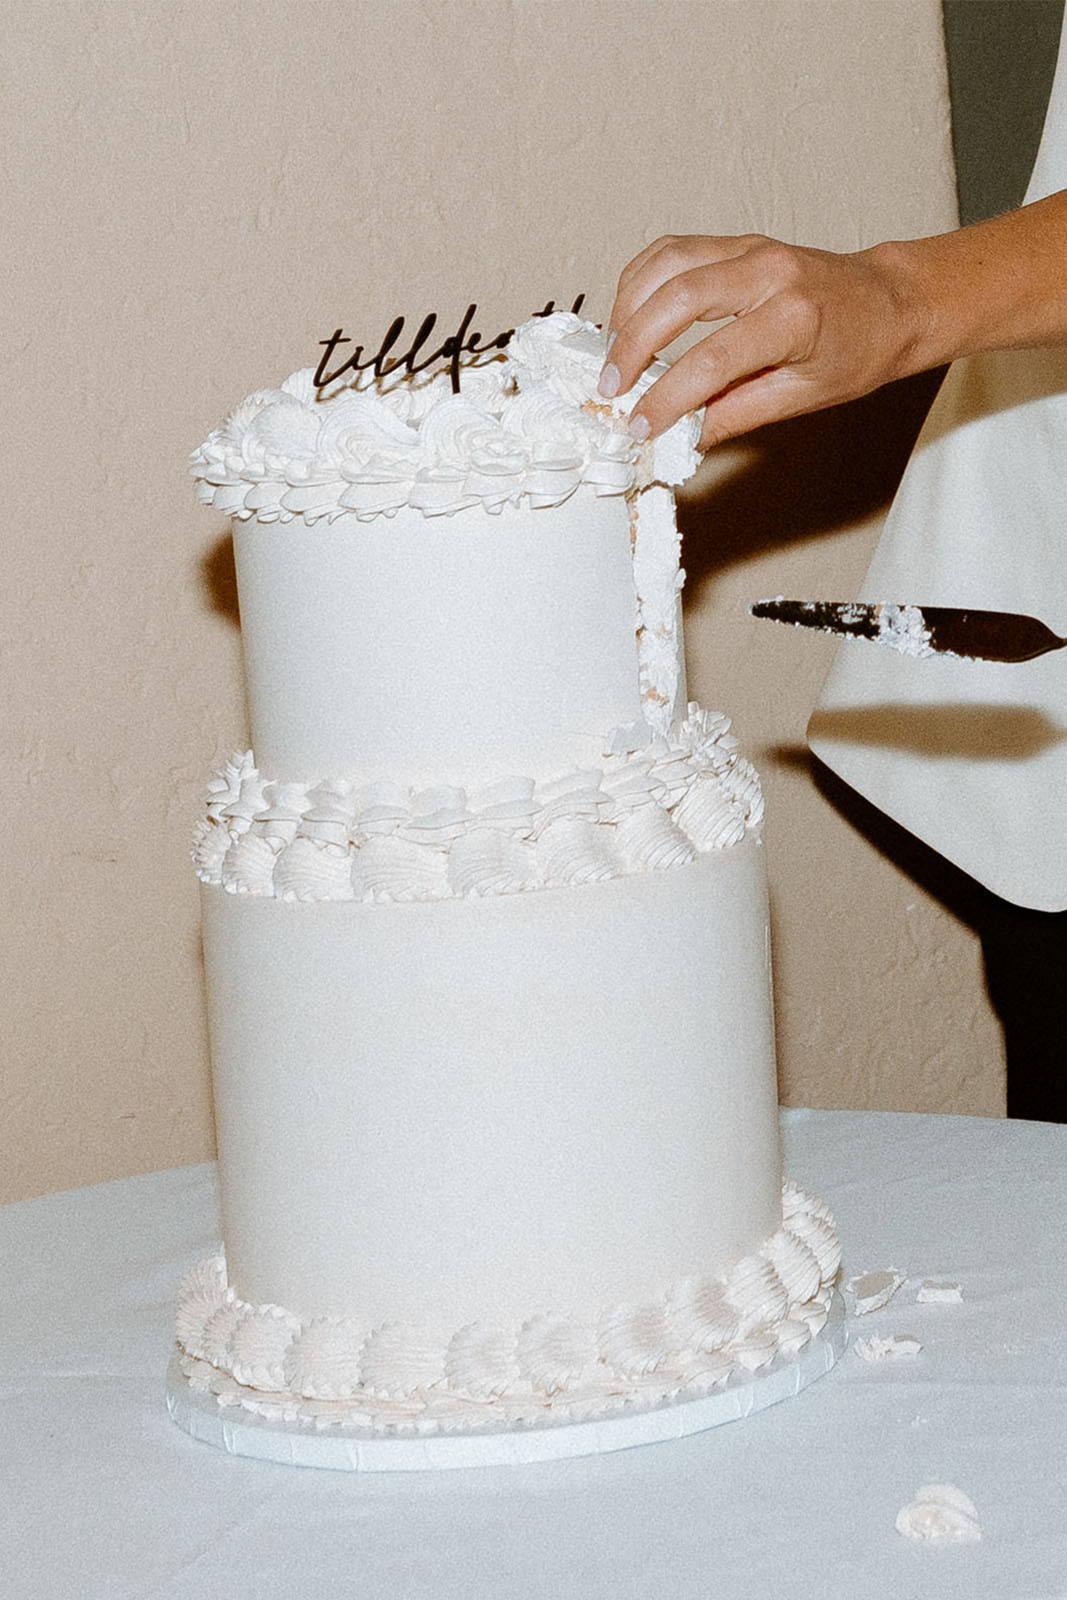 Wedding cake “till death do us apart”